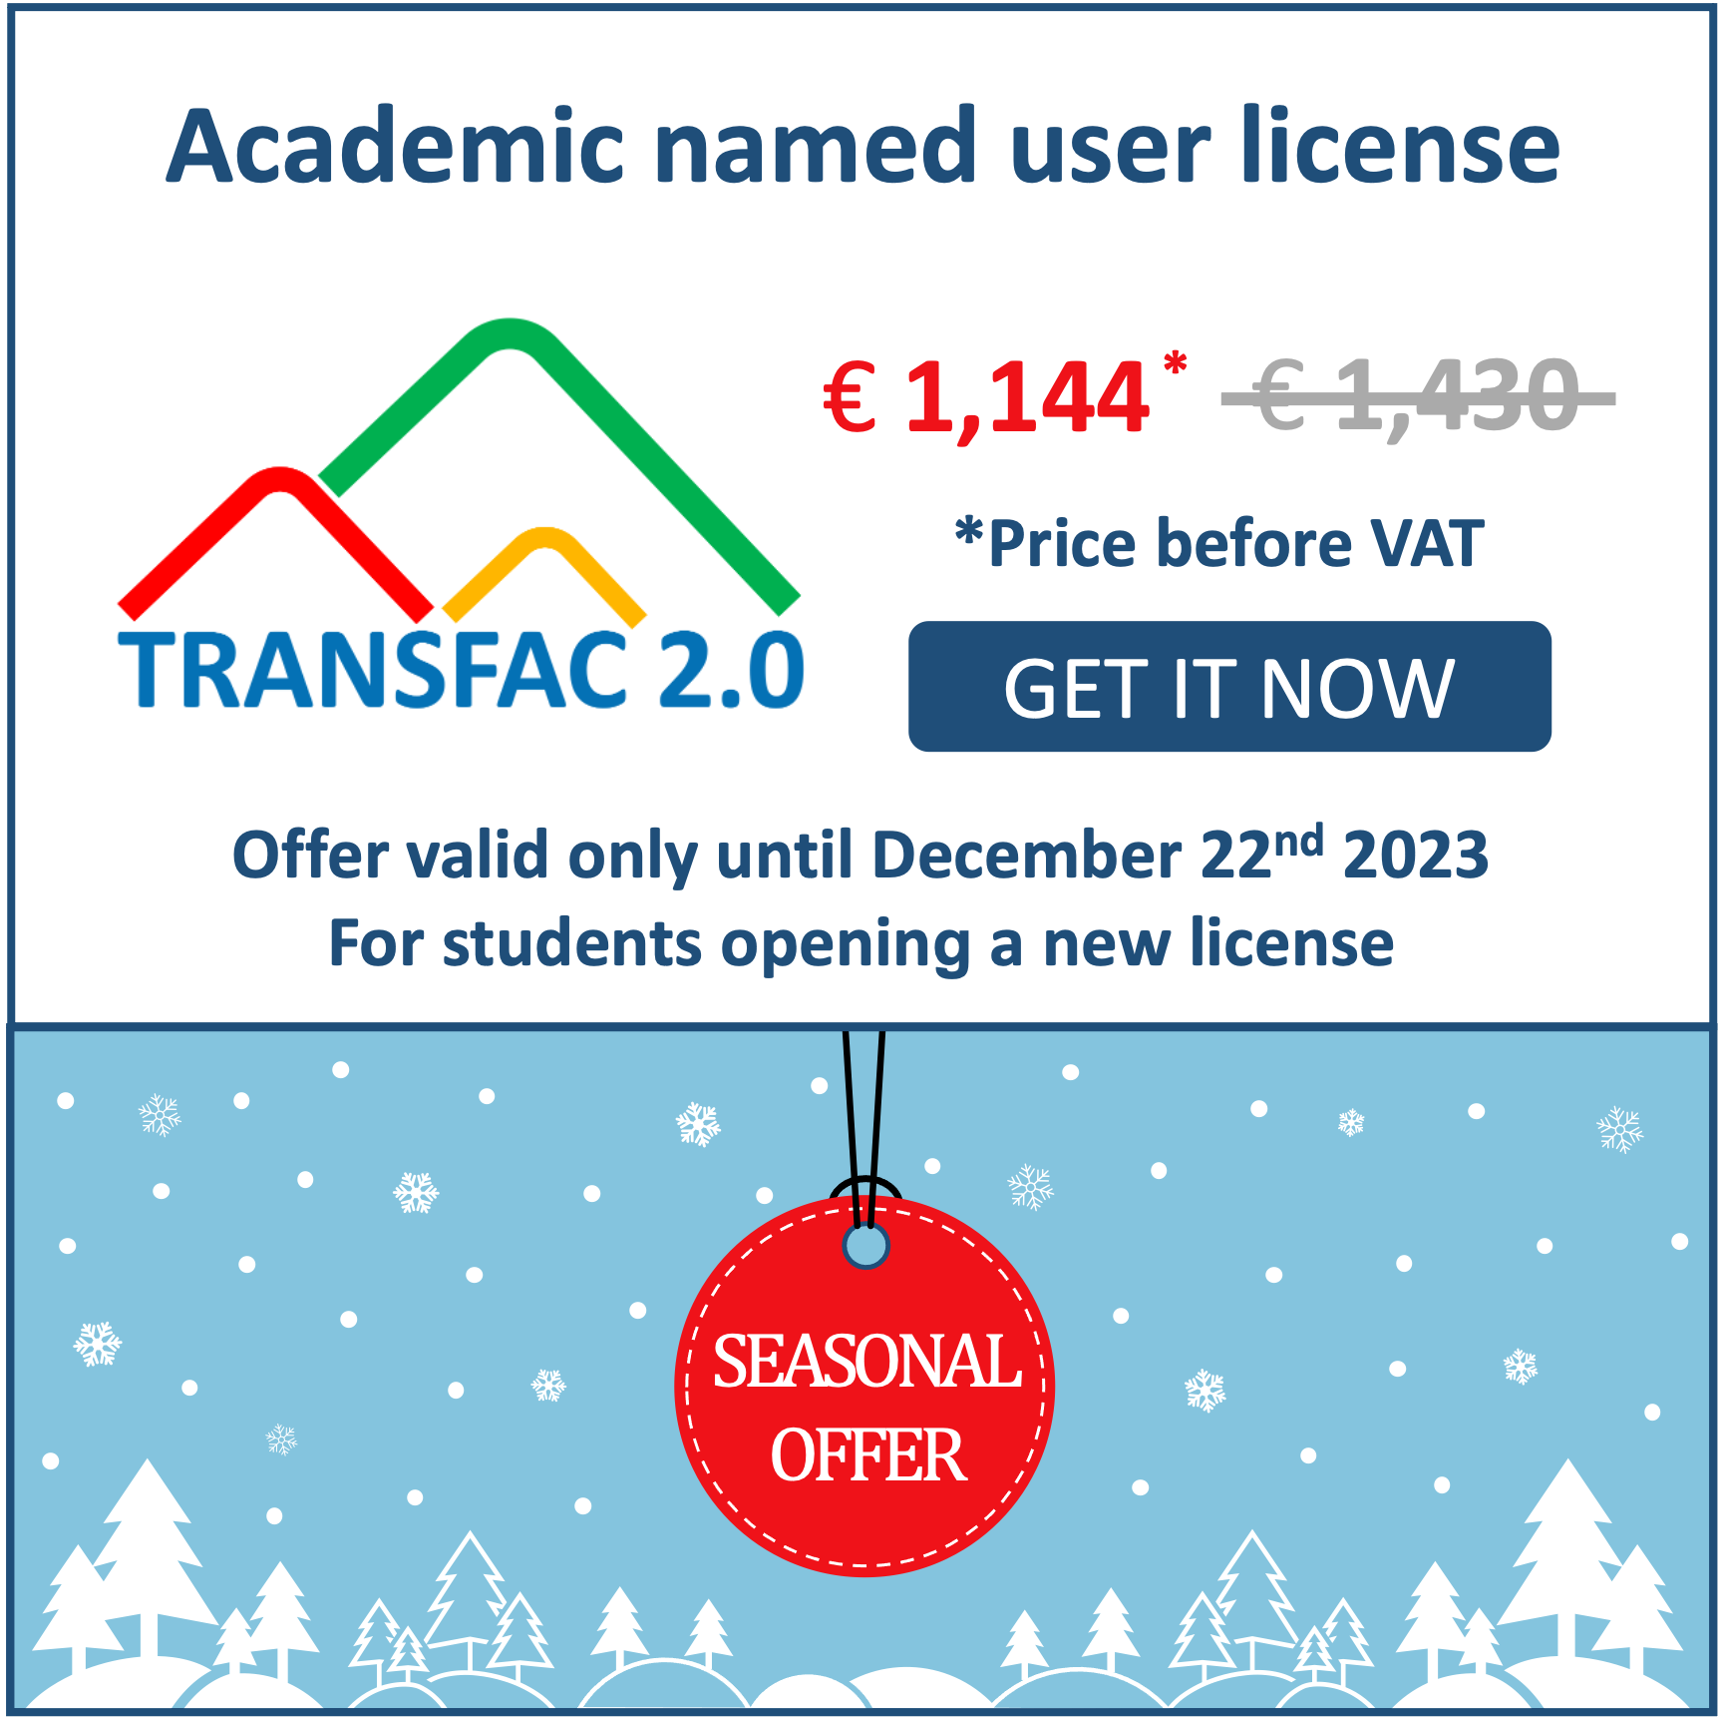 TRANSFAC offer